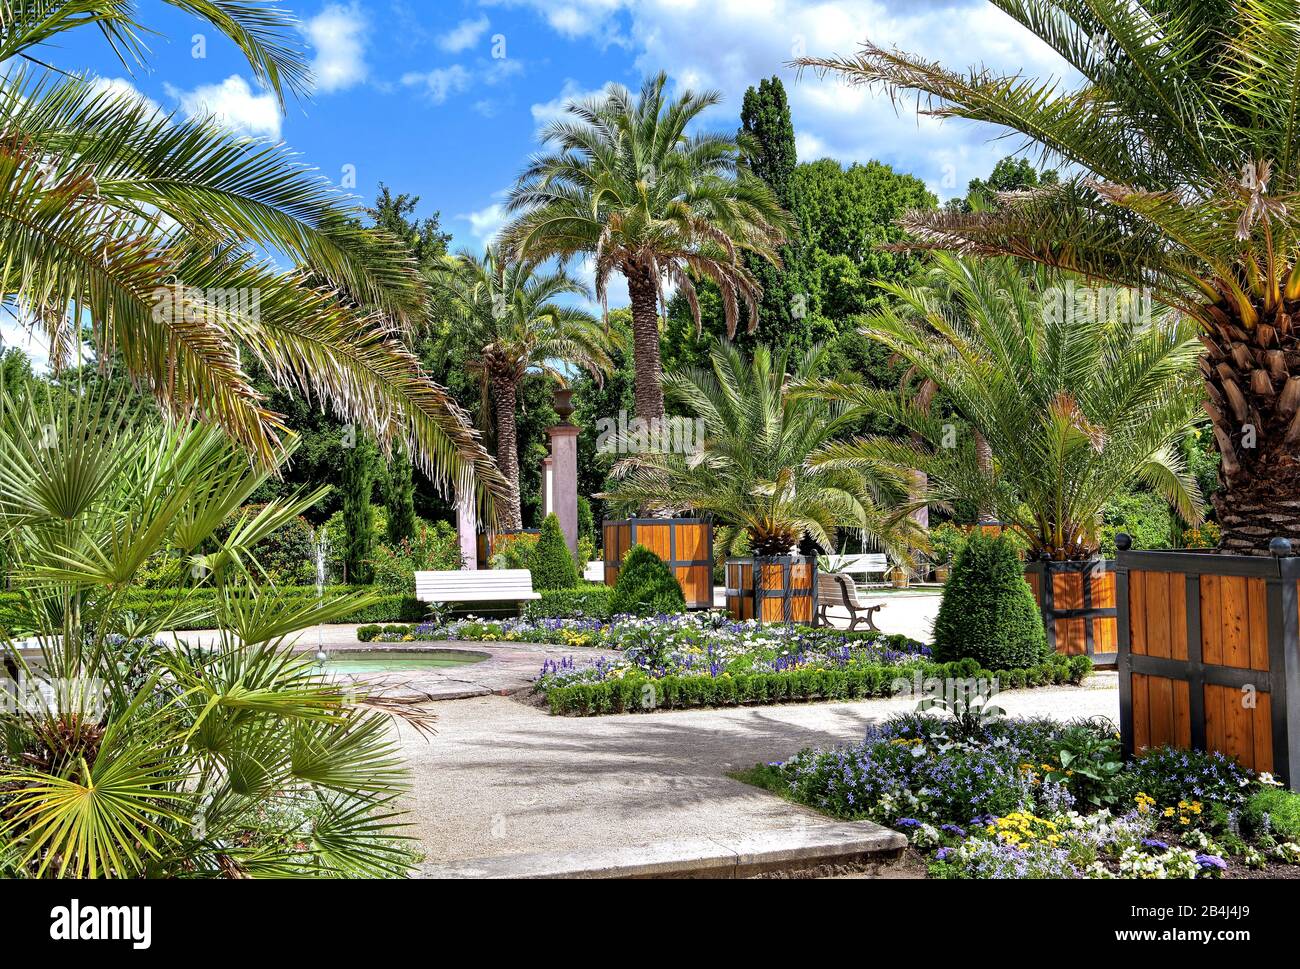 Jardin de palmiers dans le parc thermal Bad Pyrmont, Staatsbad Emmertal, Weserbergland, Basse-Saxe, Allemagne Banque D'Images